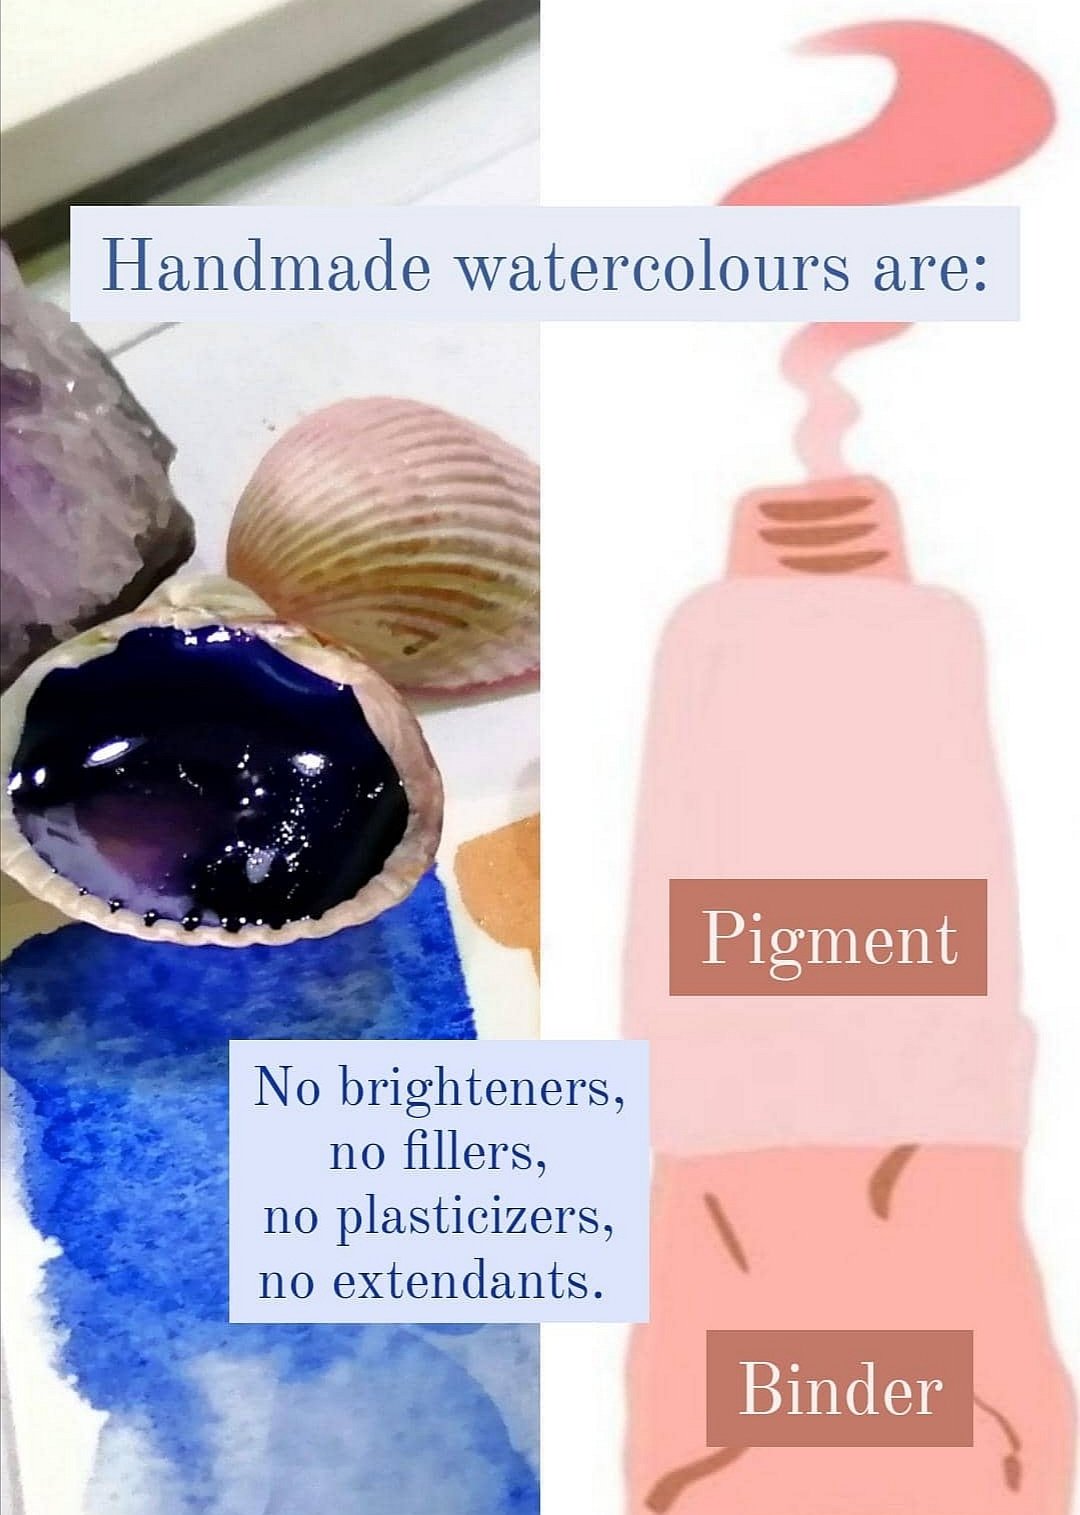 Handmade watercolors have no fillers